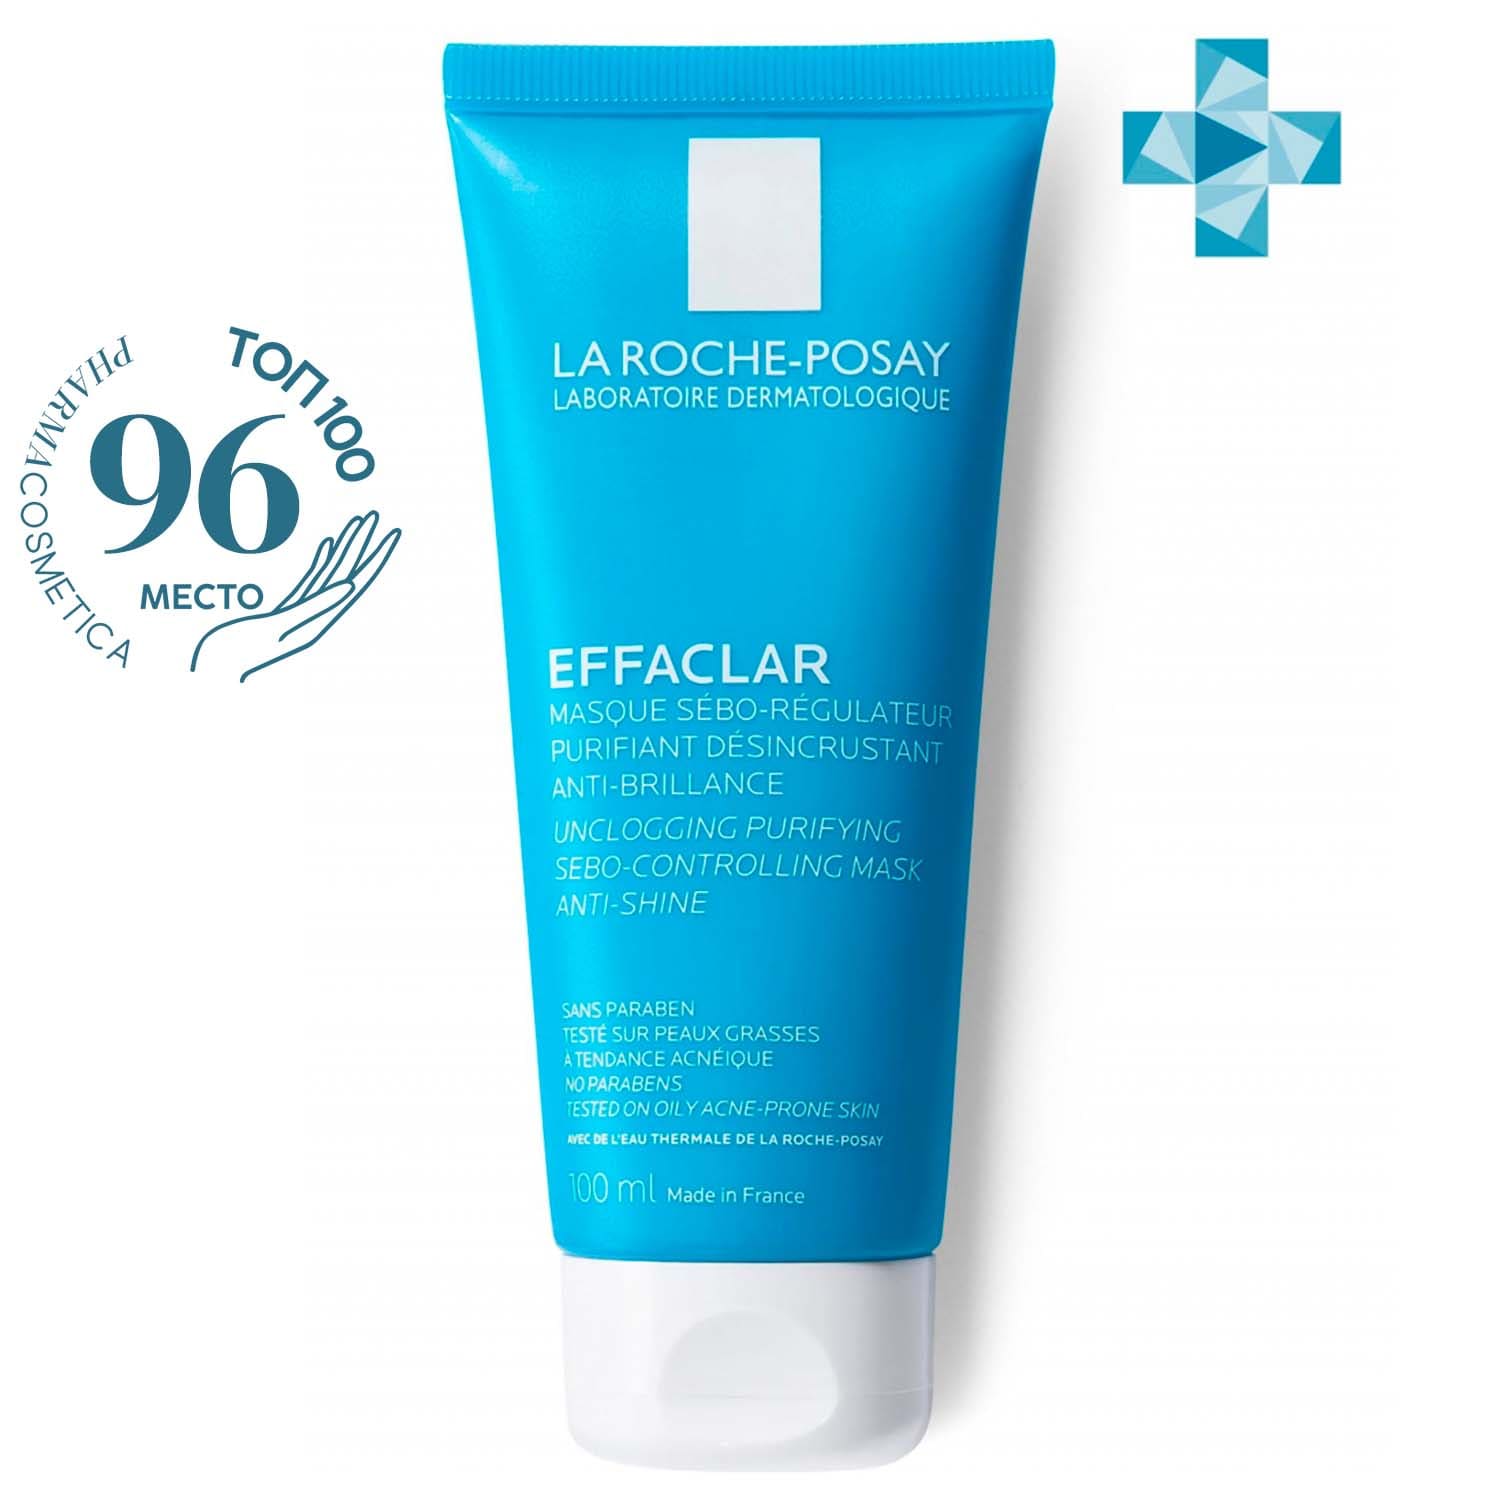 La Roche-Posay Очищающая матирующая маска для проблемной кожи, 100 мл (La Roche-Posay, Effaclar)